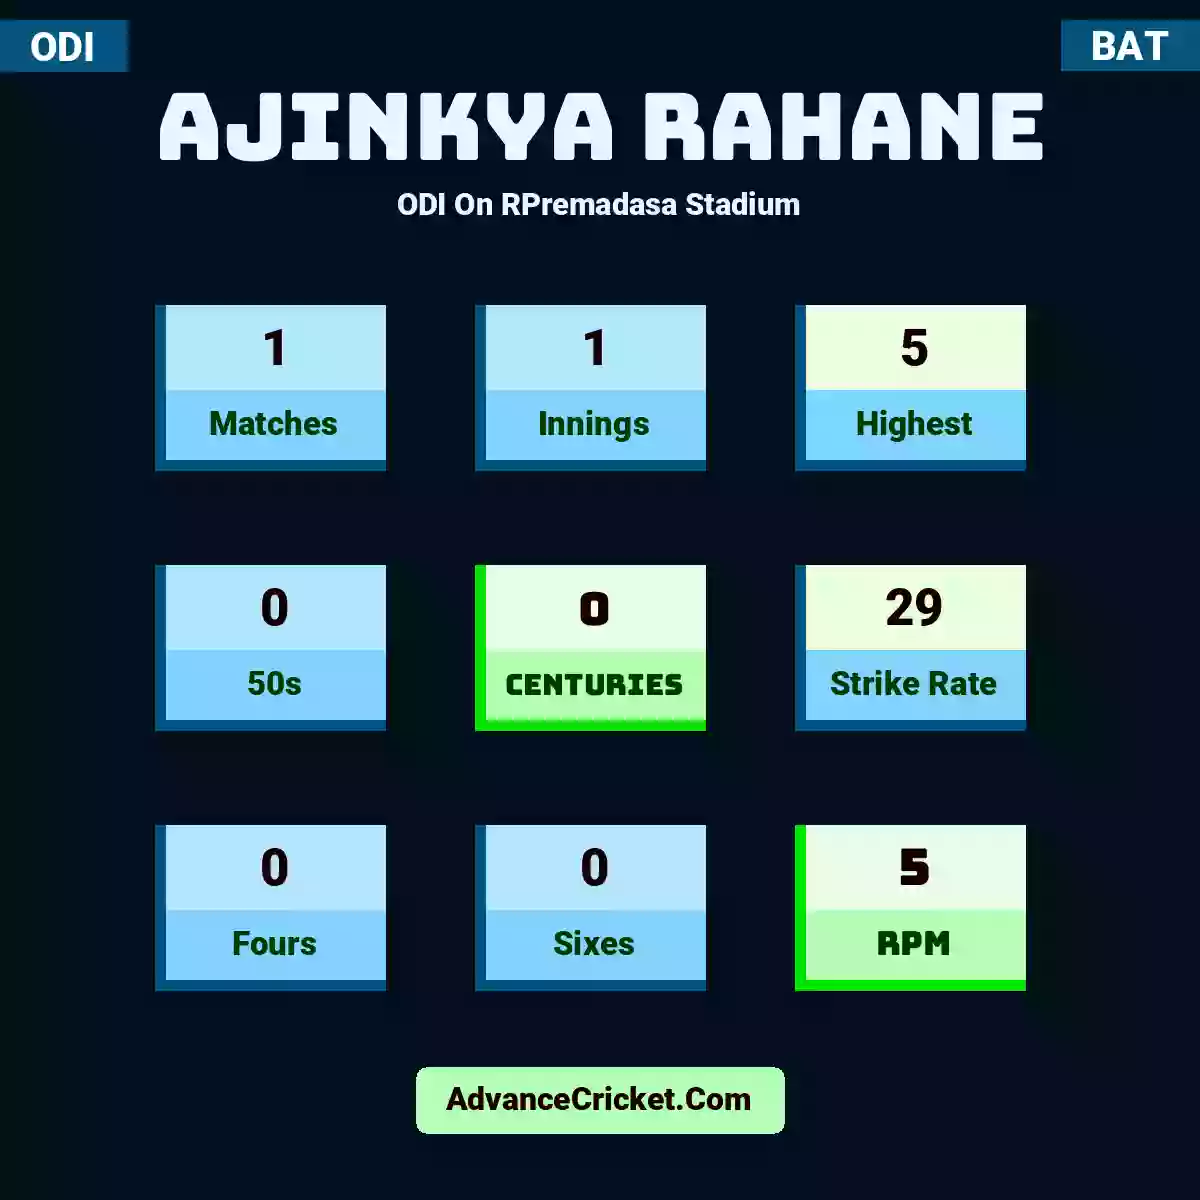 Ajinkya Rahane ODI  On RPremadasa Stadium, Ajinkya Rahane played 1 matches, scored 5 runs as highest, 0 half-centuries, and 0 centuries, with a strike rate of 29. A.Rahane hit 0 fours and 0 sixes, with an RPM of 5.